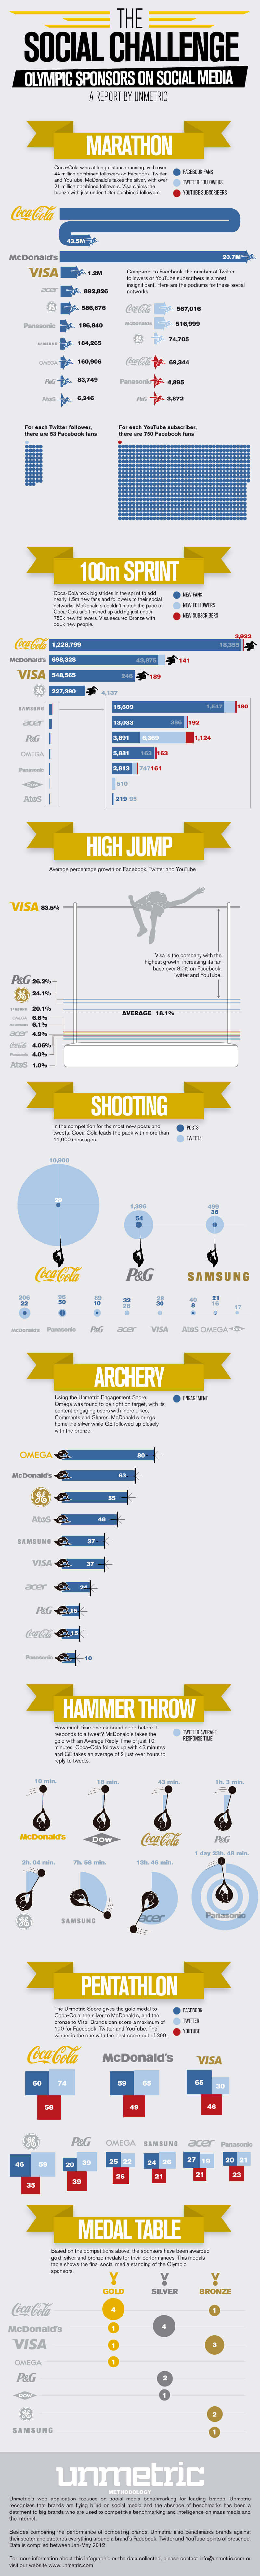 Unmetric Olympic Sponsors on Social Media Infographic